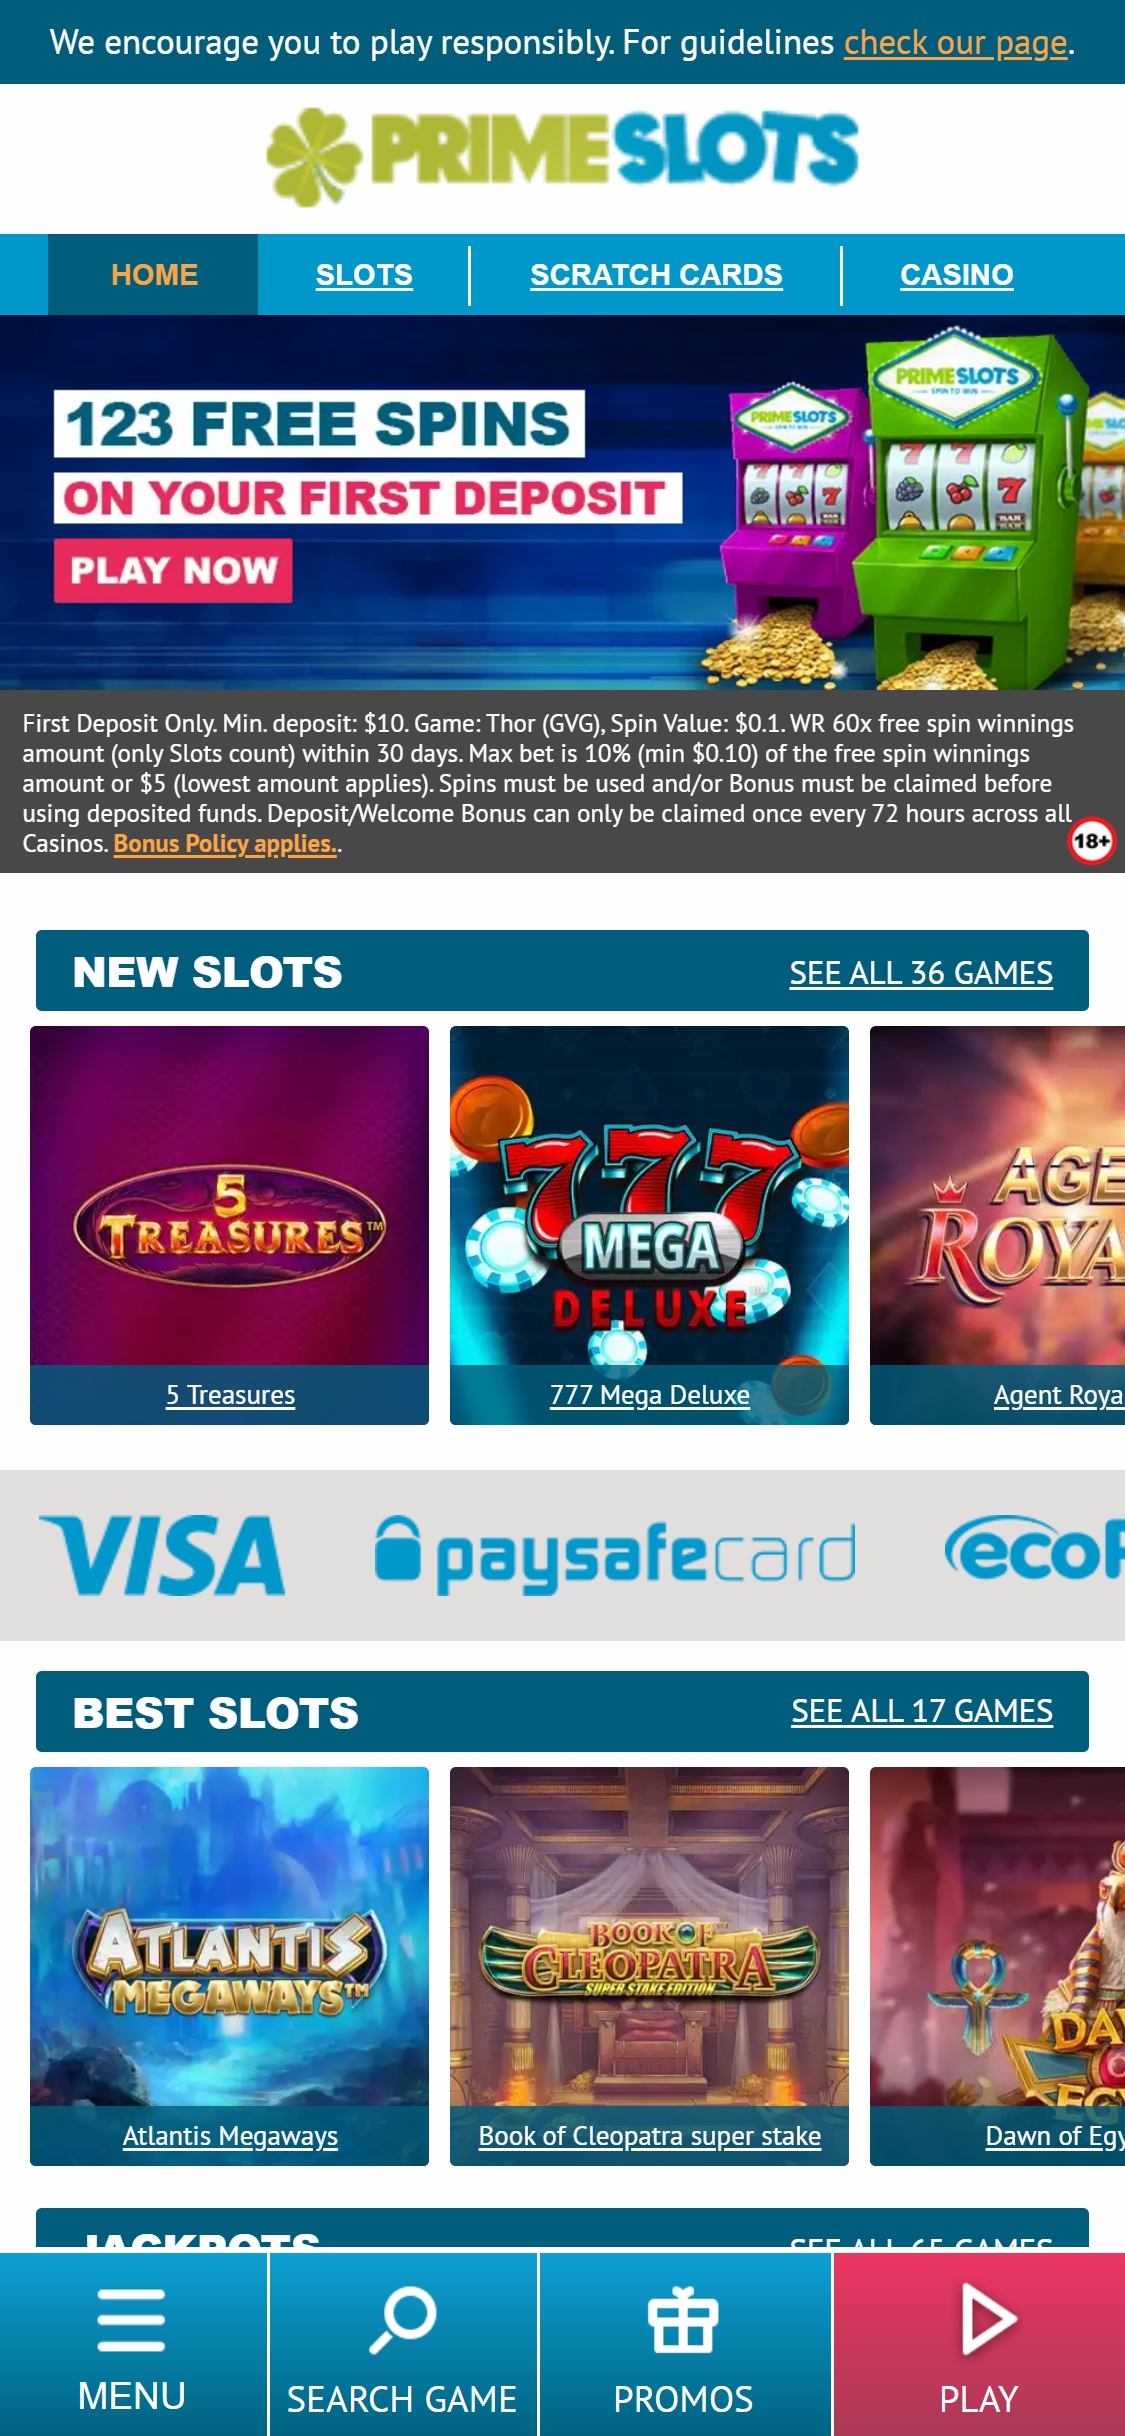 Prime Slots Casino Mobile Review